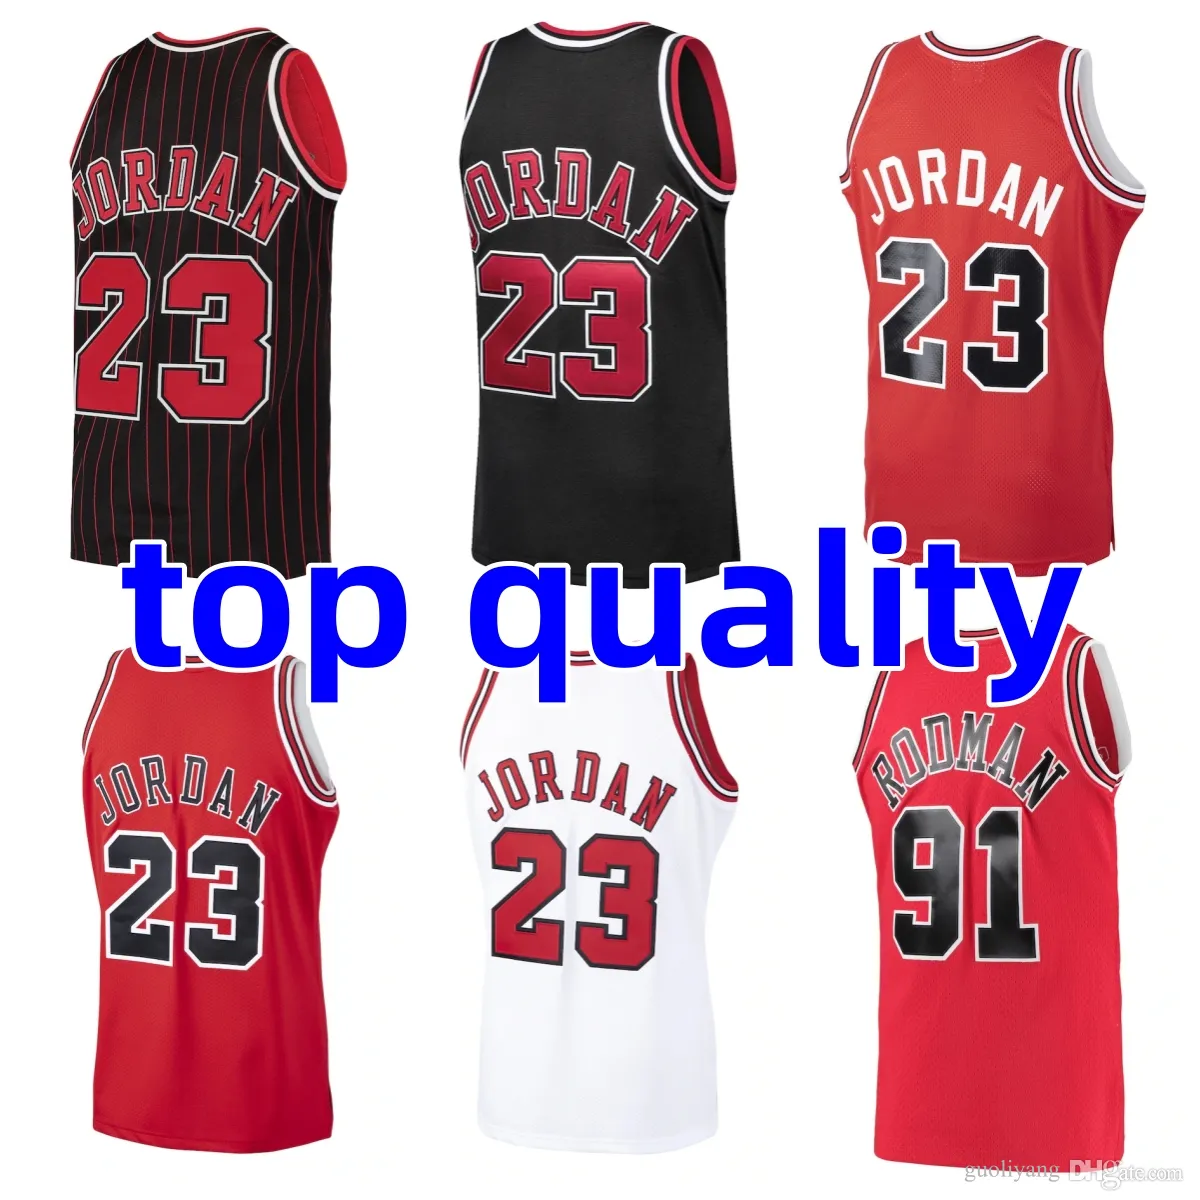 Herren-Basketballtrikot #11 DeMar DeRozan #33 Scottie Pippen #91 Dennis Rodman Mitchell Ness Brand Draft Pick Jersey weiß schwarz rot